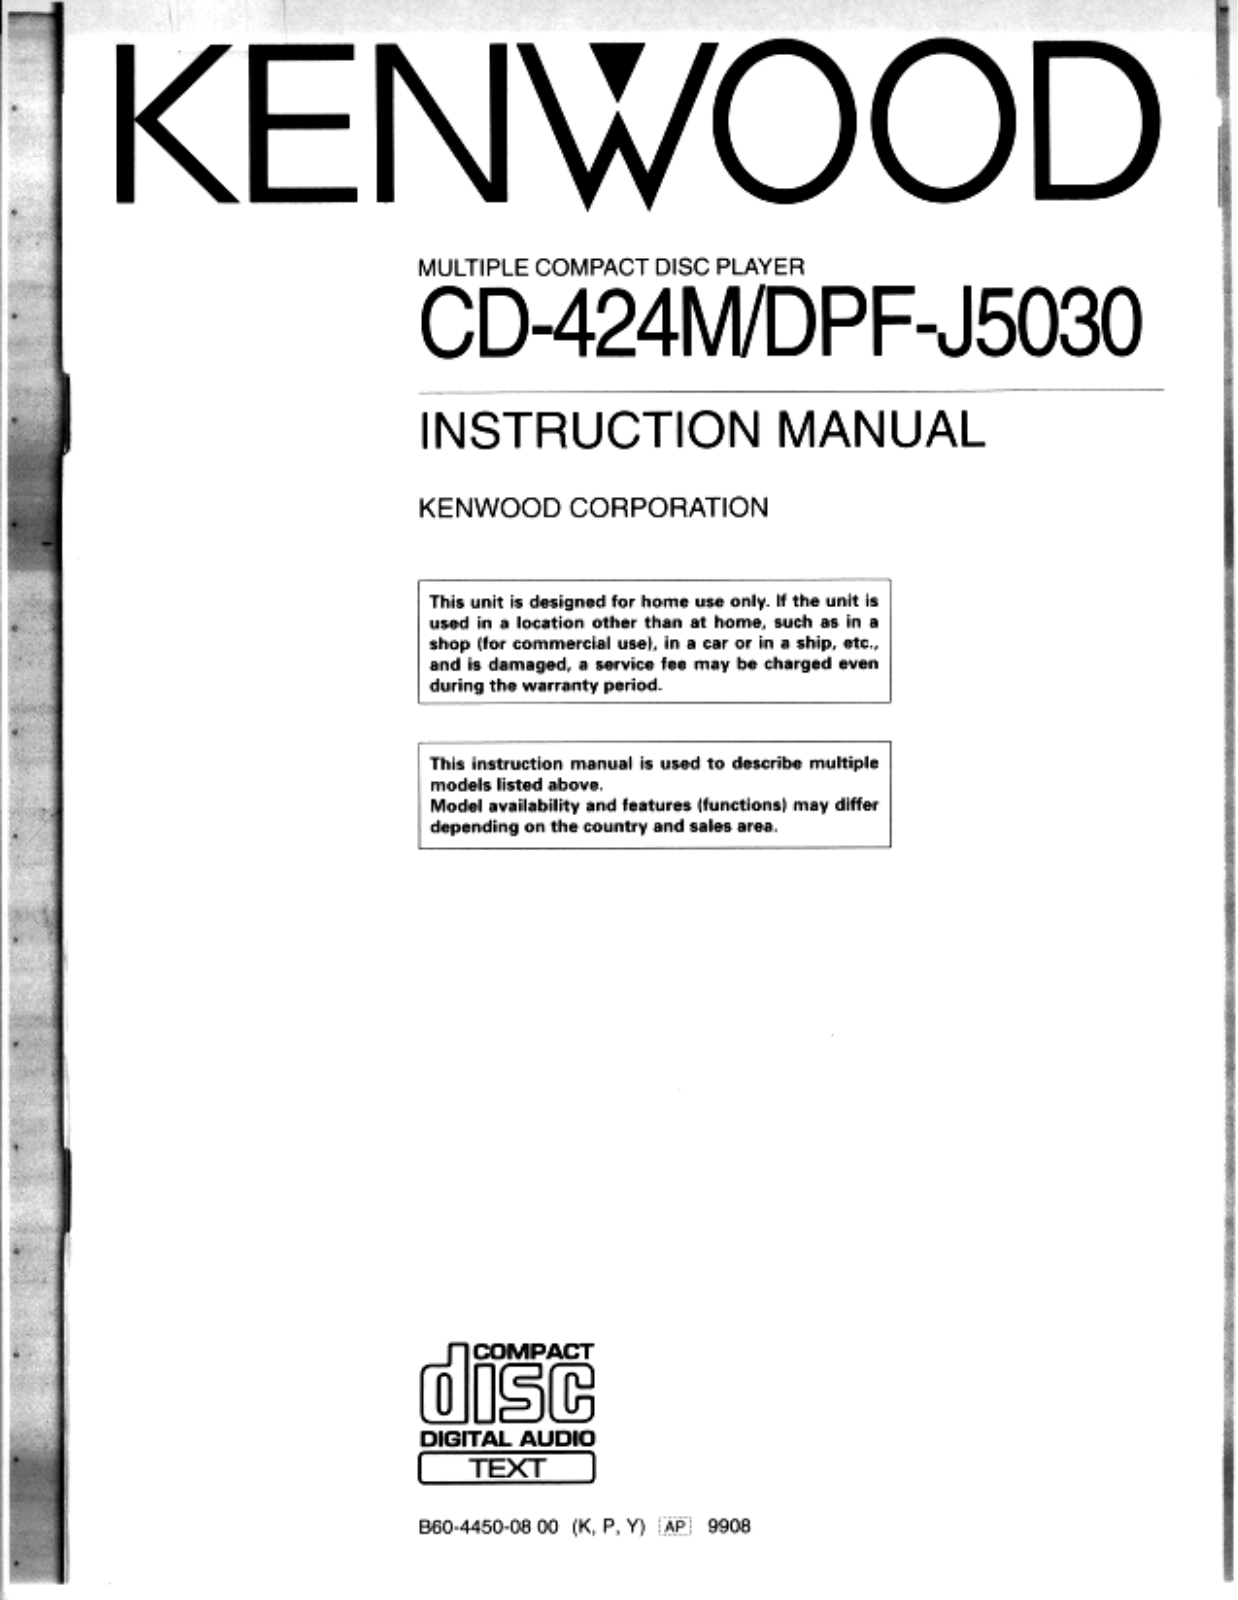 Kenwood DPF-J5030, CD-424M User Manual